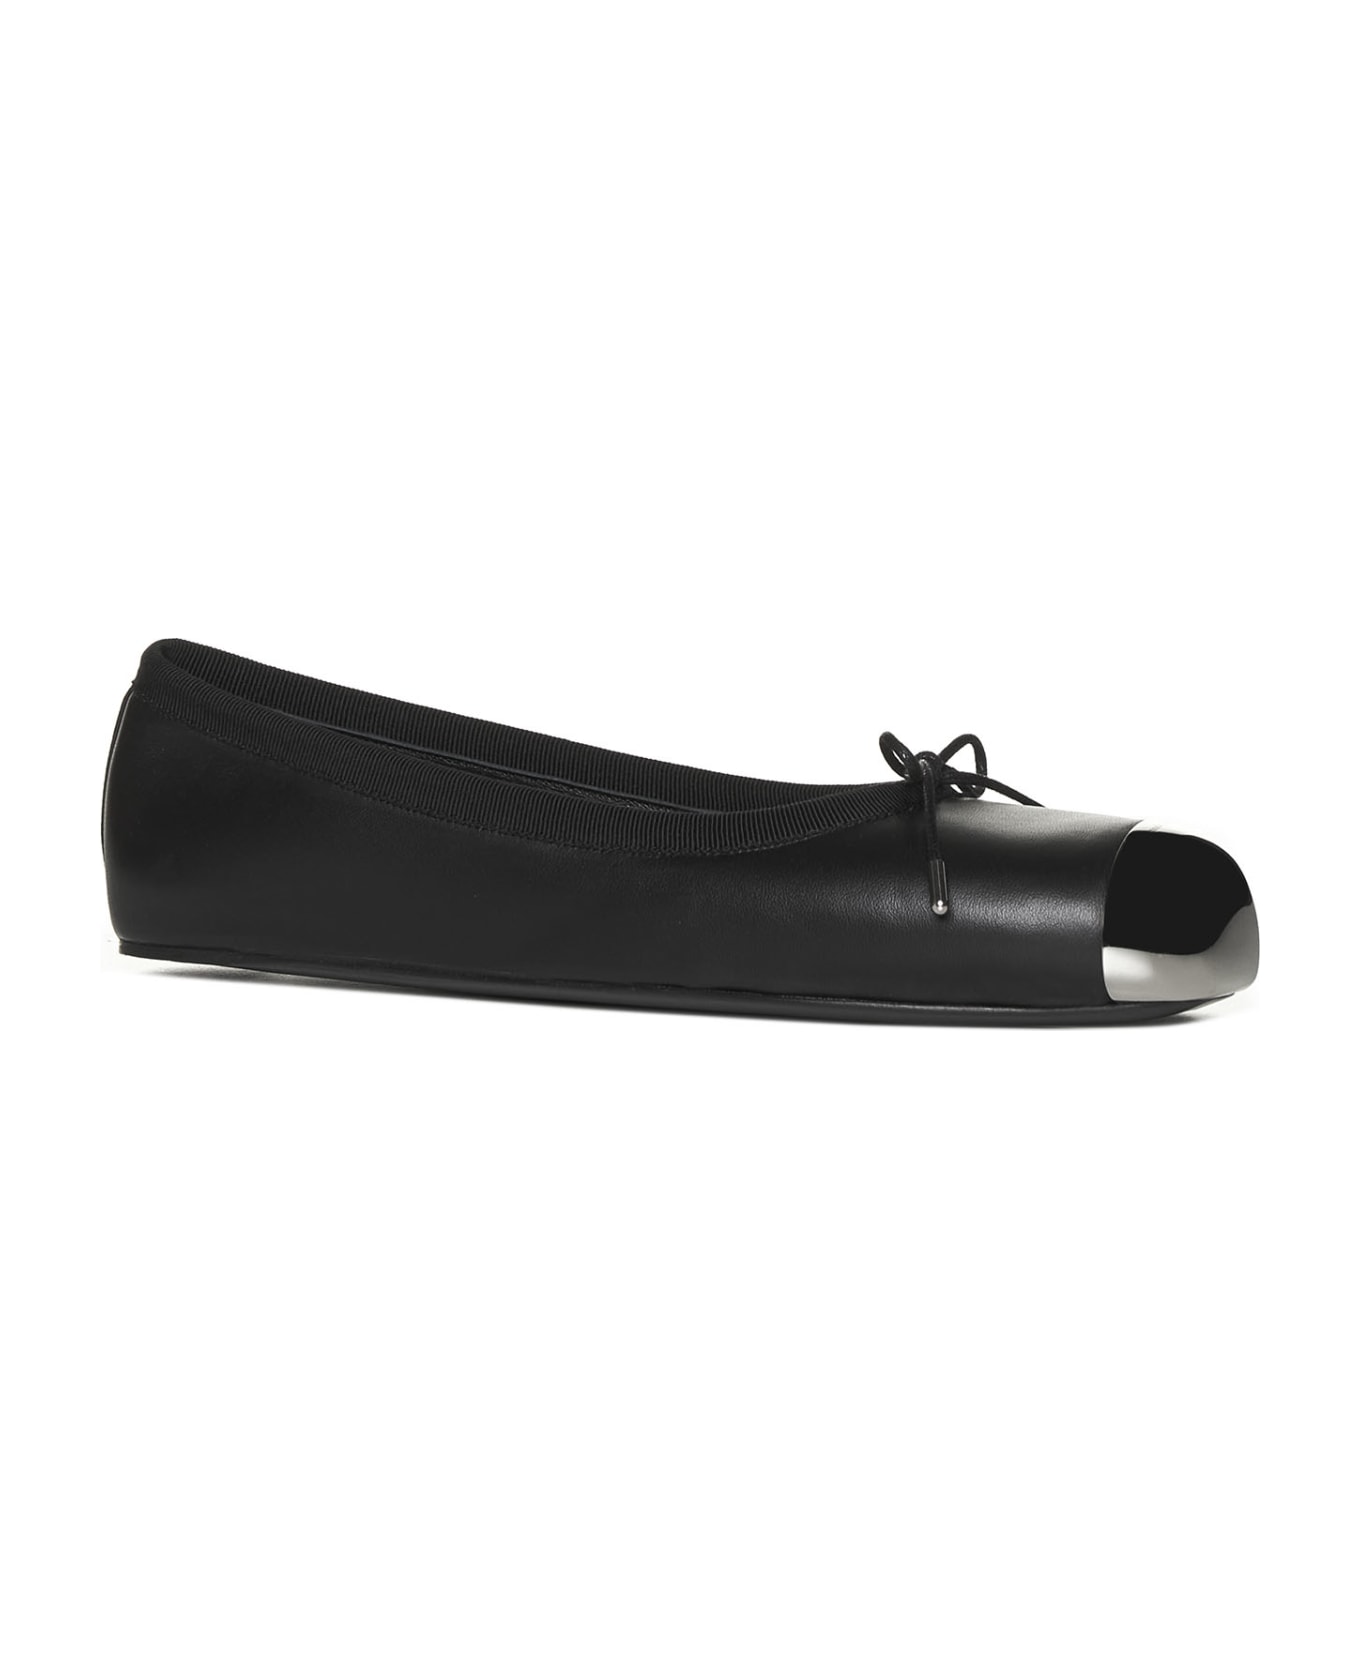 Alexander McQueen Metal Toe Ballet Flats - Black Silver